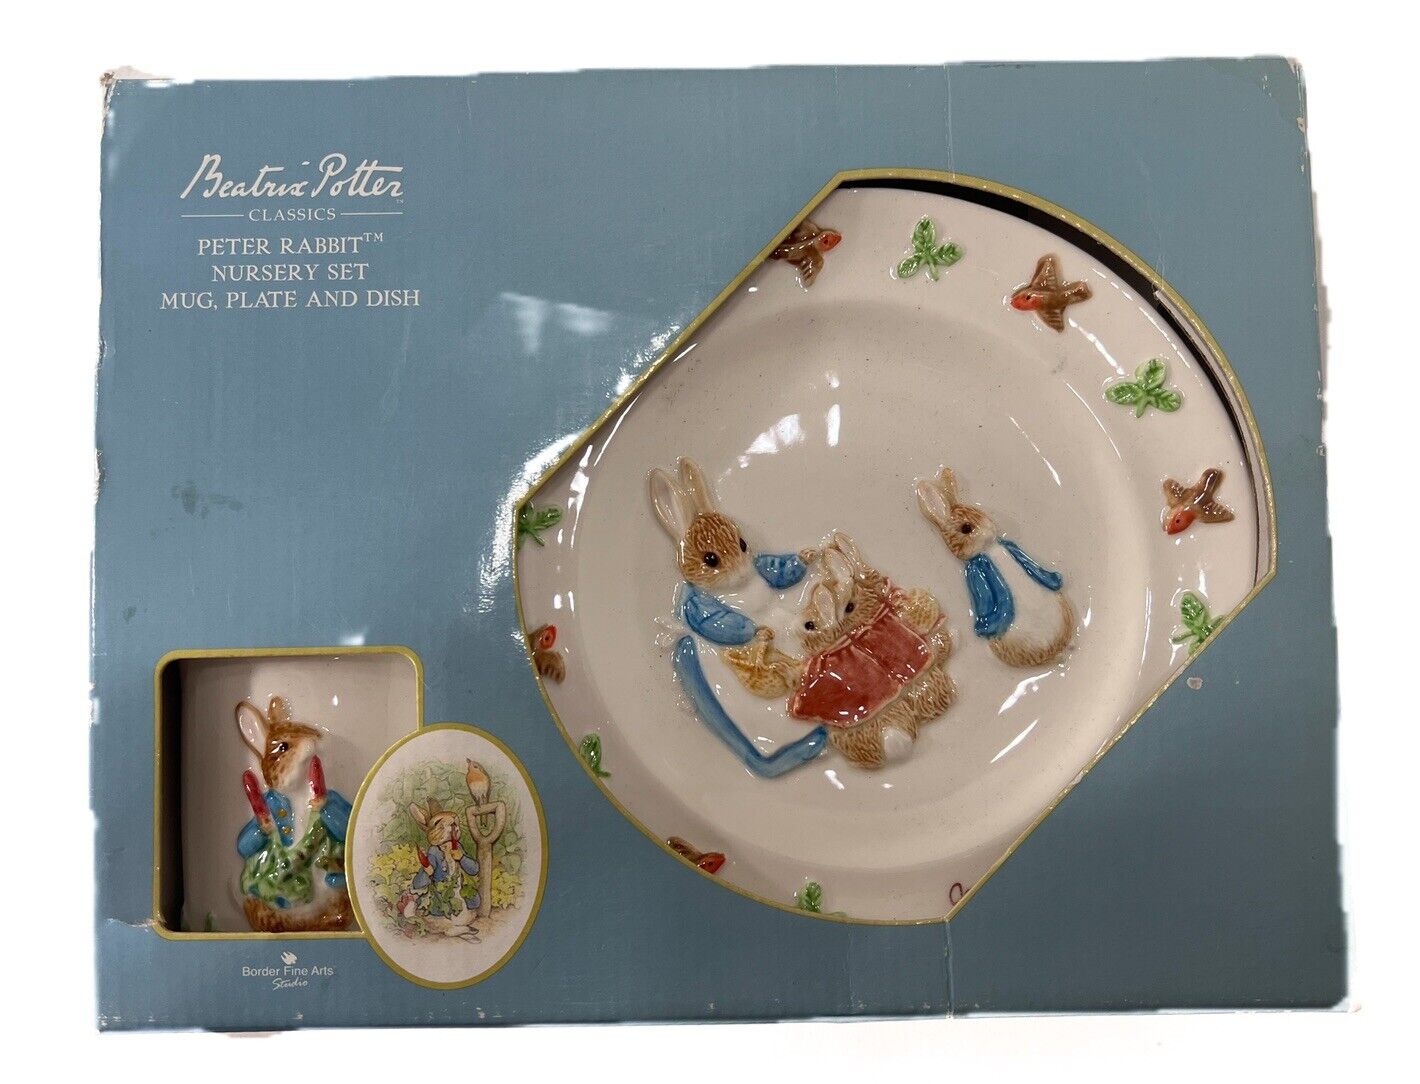 NEW 2005 Open Box Beatrix Potter A6356 Peter Rabbit Three Piece Nursery Set Gift